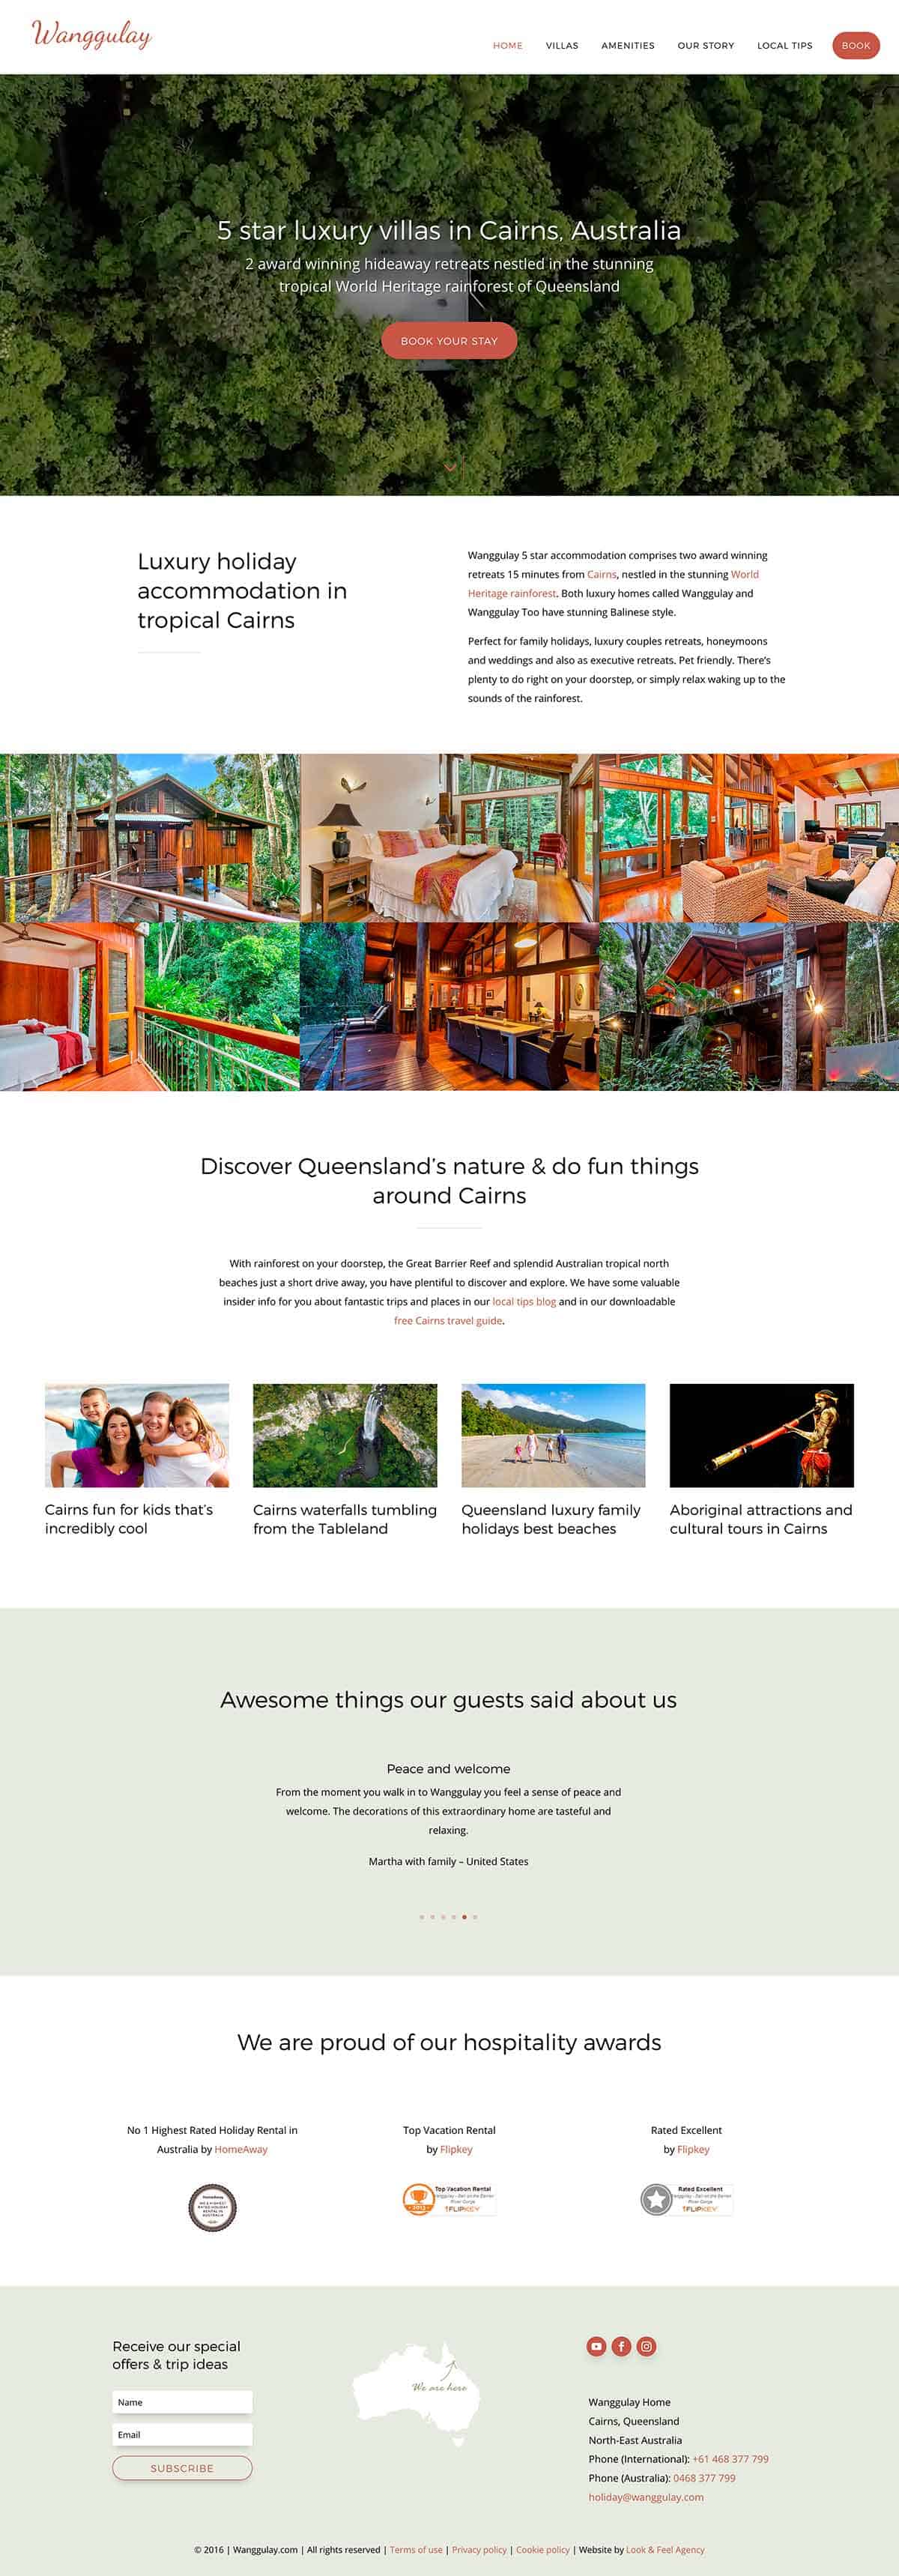 Hotel website design for Wanggulay luxury villas in Cairns, Australia